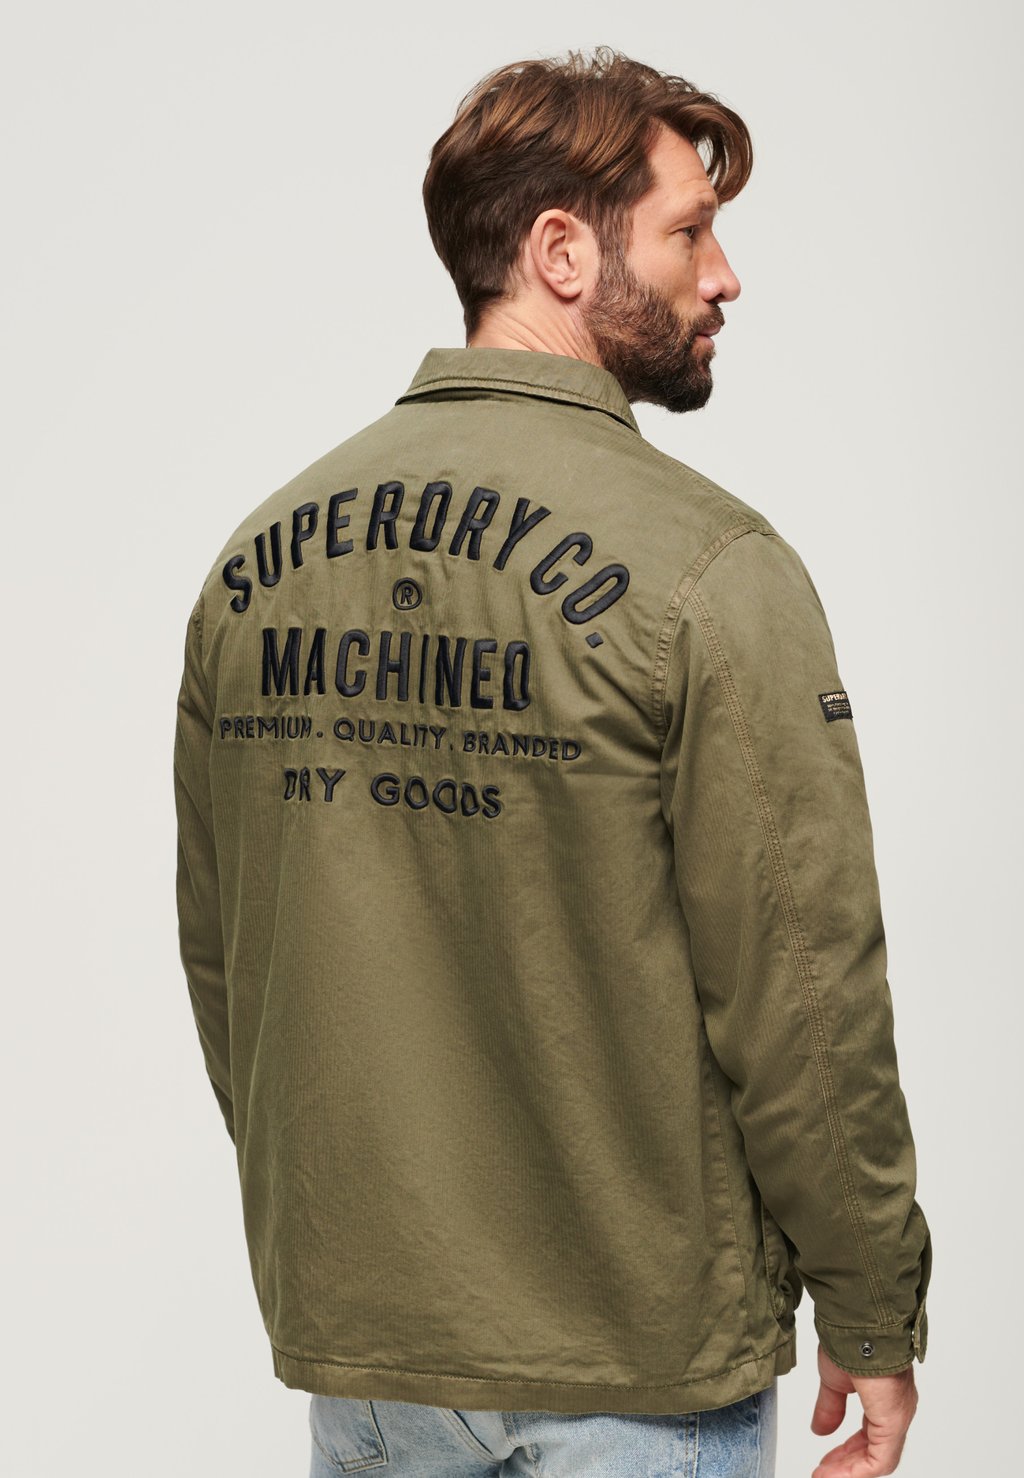 Демисезонная куртка MILITARY M65 EMBROIDERED Superdry, цвет surplus goods olive green куртка hydro us fieldjacket m65 surplus